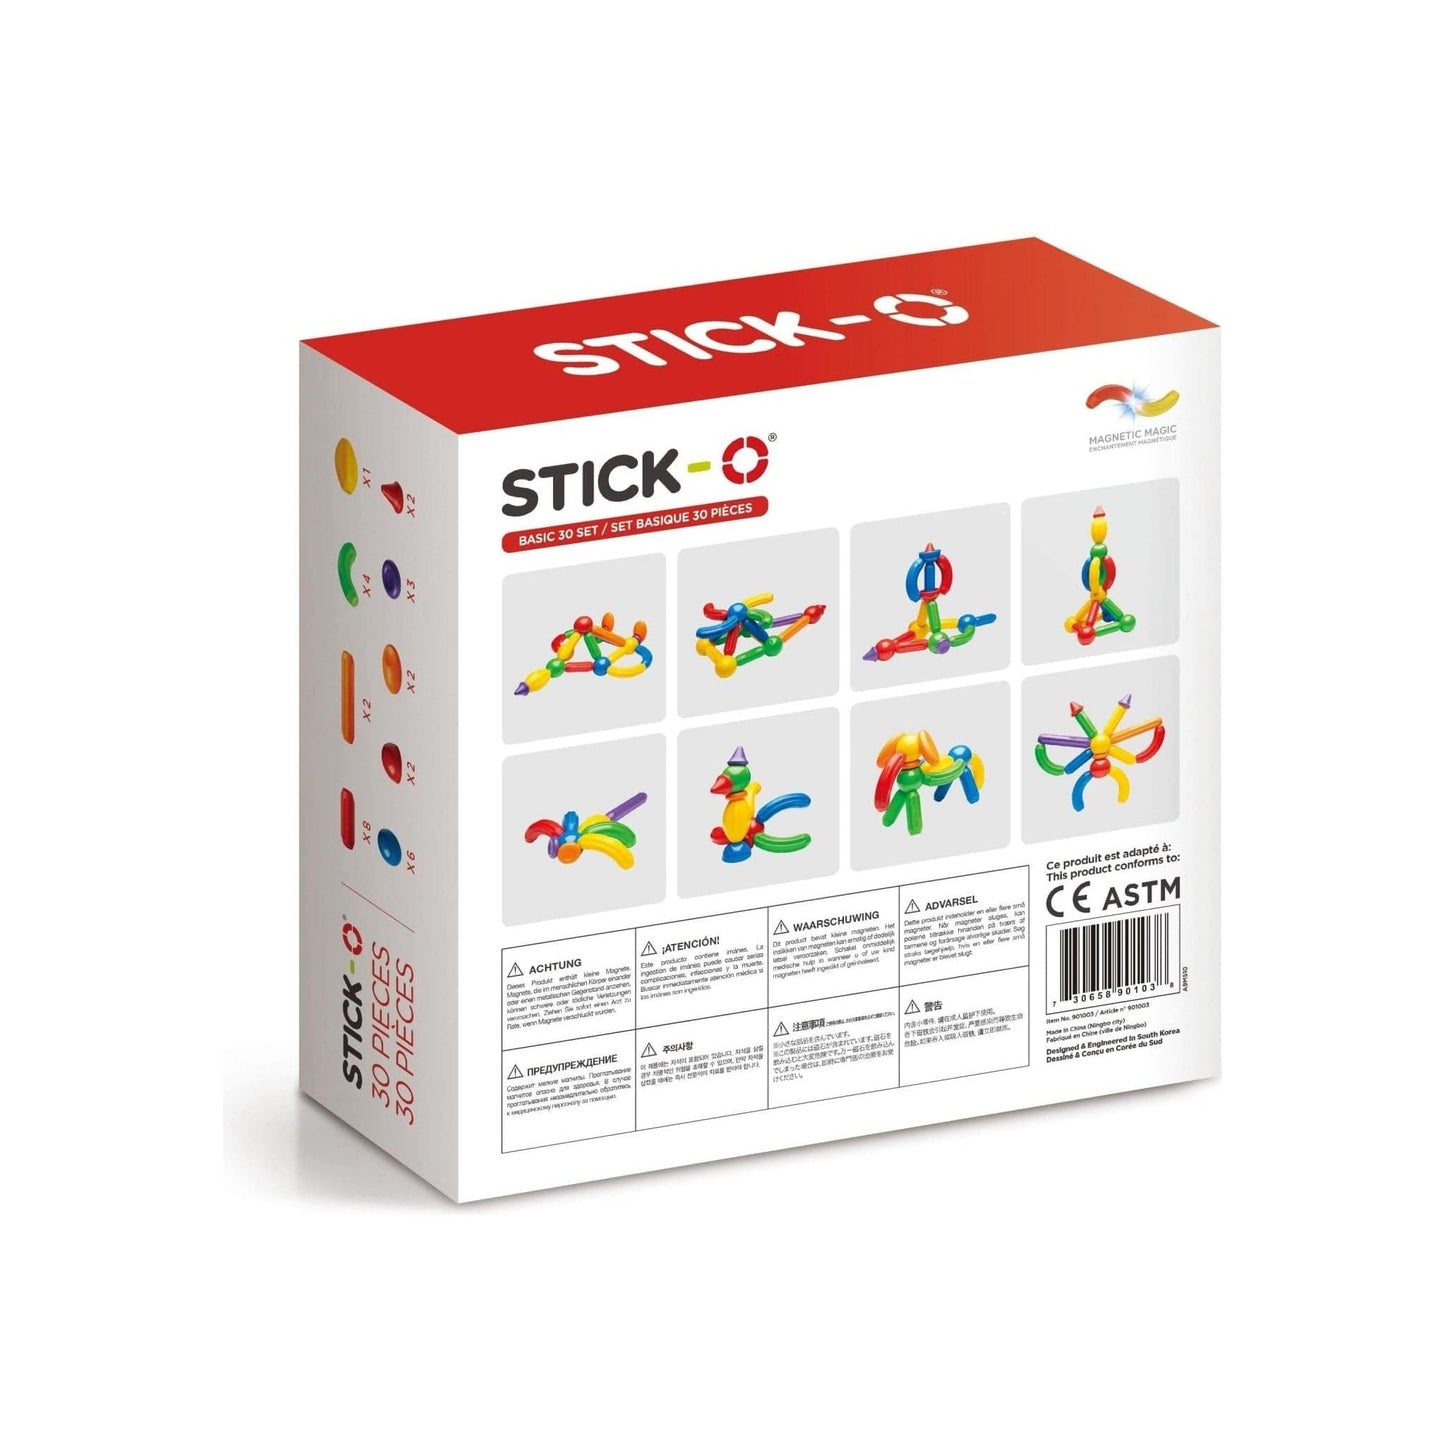 Magformers Stick-O Basic 30 Piece Set back of box